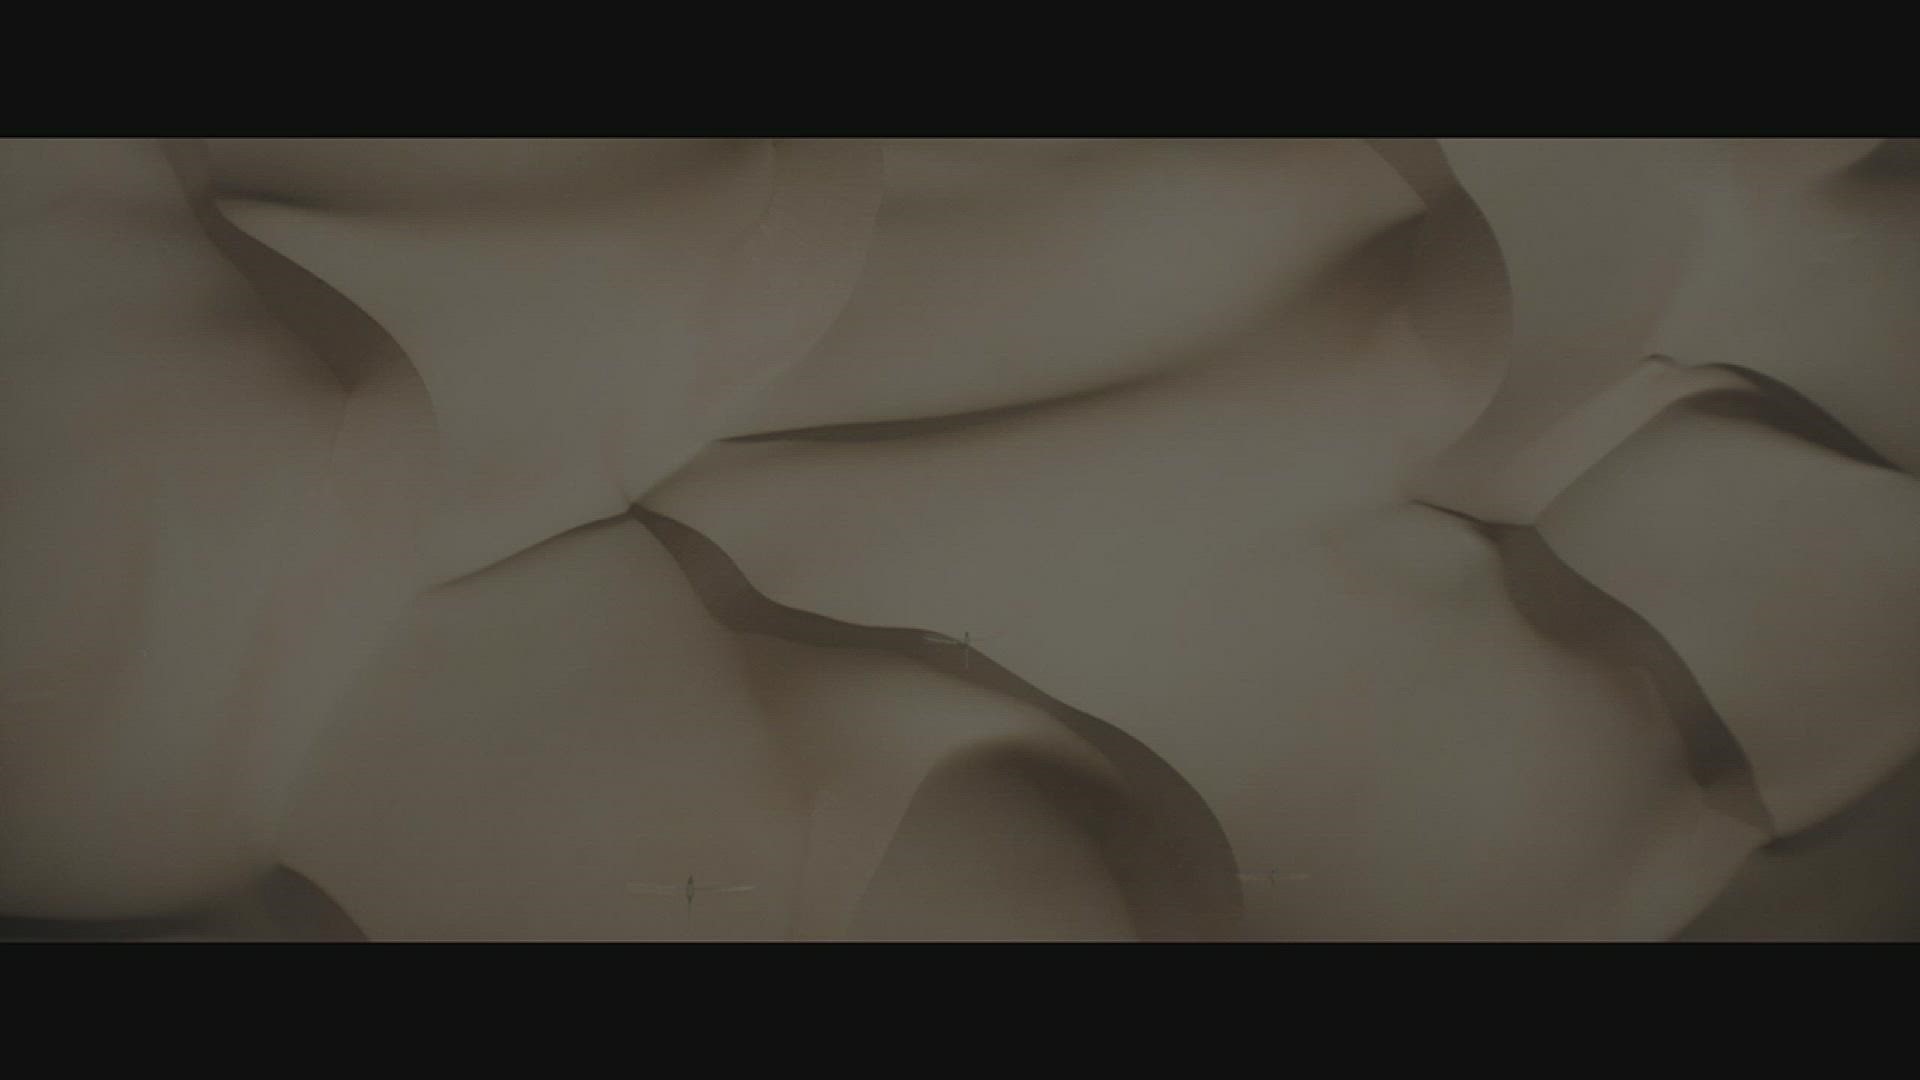 Theatrical trailer for "Dune" starring Timothée Chalamet, Rebecca Ferguson, Oscar Isaac and Zendaya.